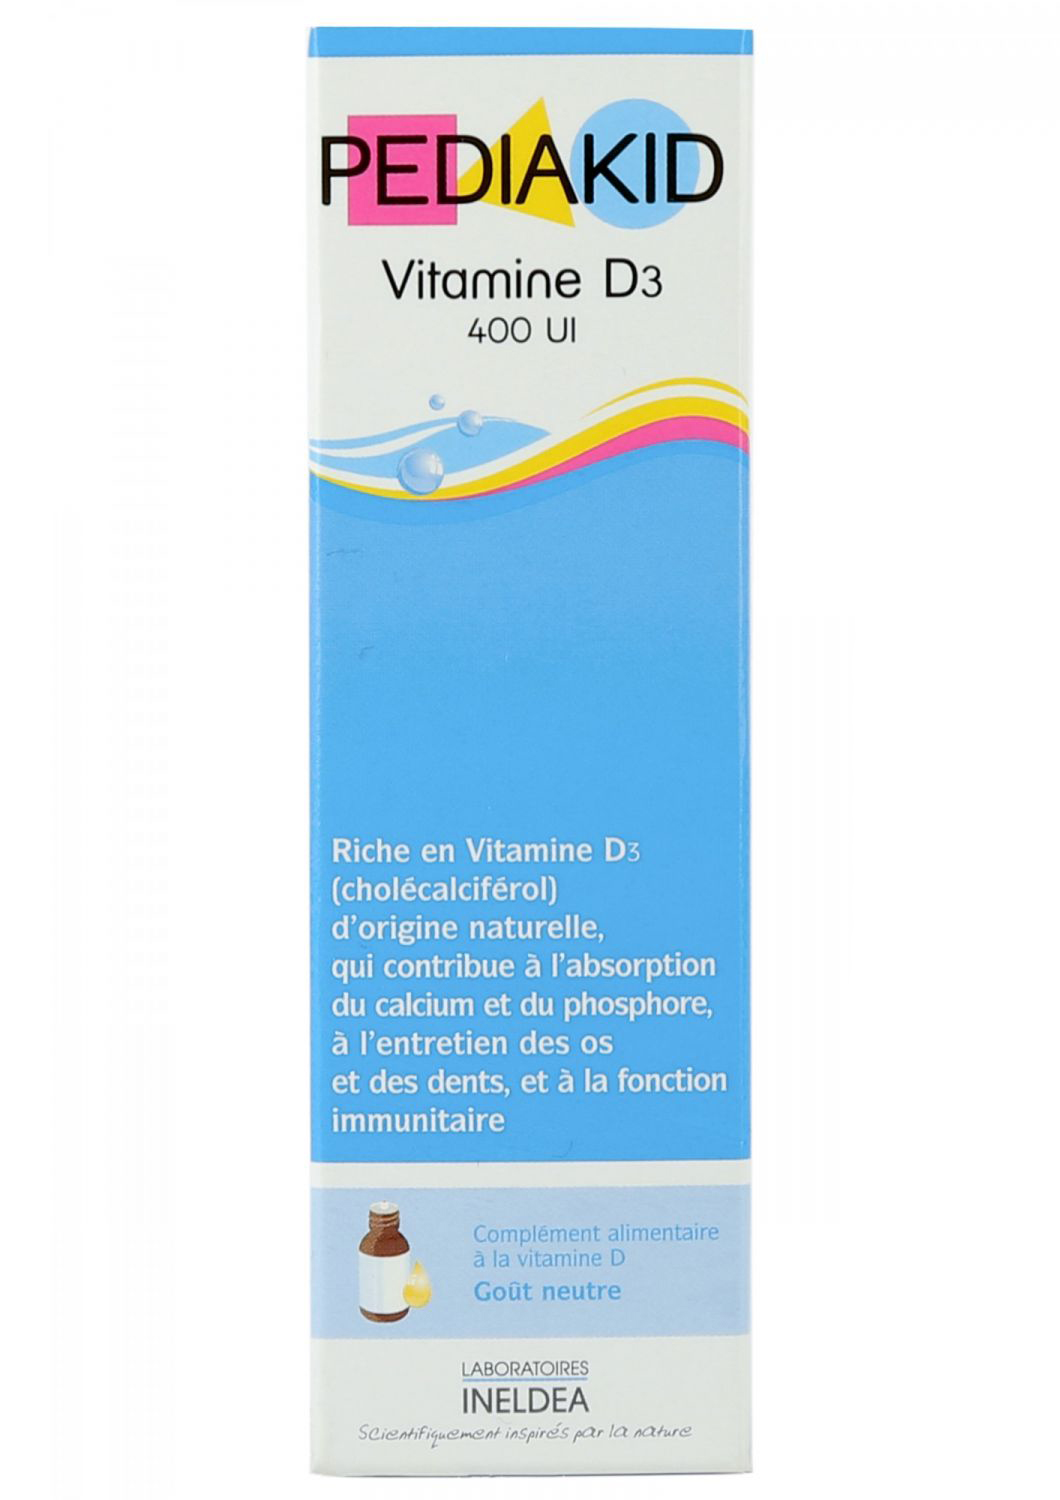 Pediakid vitamin D3 mẫu mới